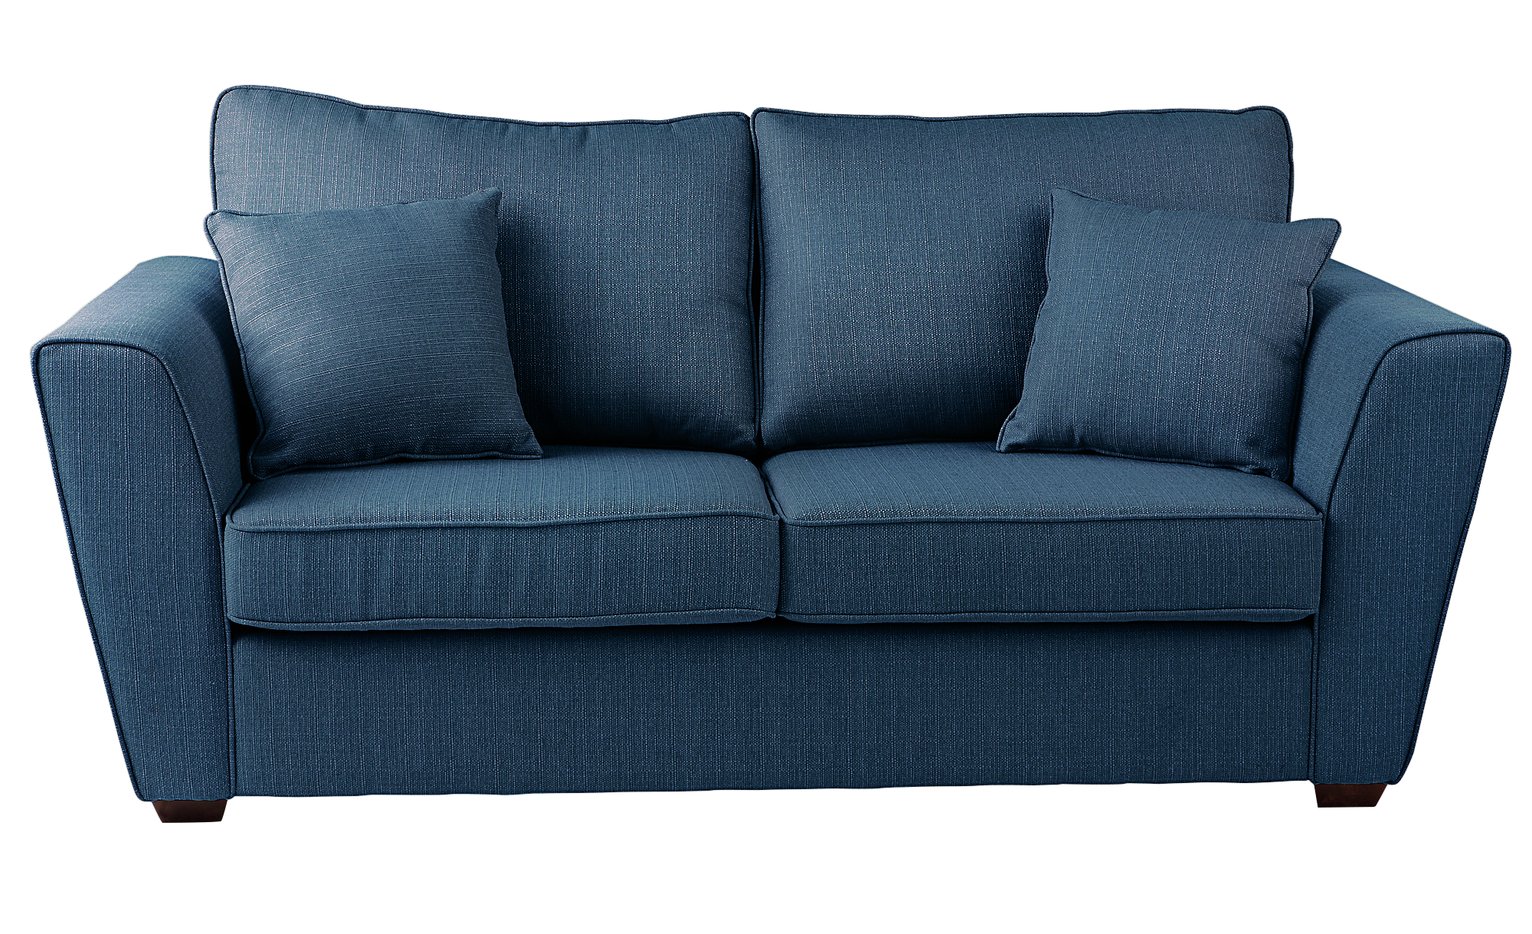 Argos Home Renley 2 Seater Fabric Sofa - Blue